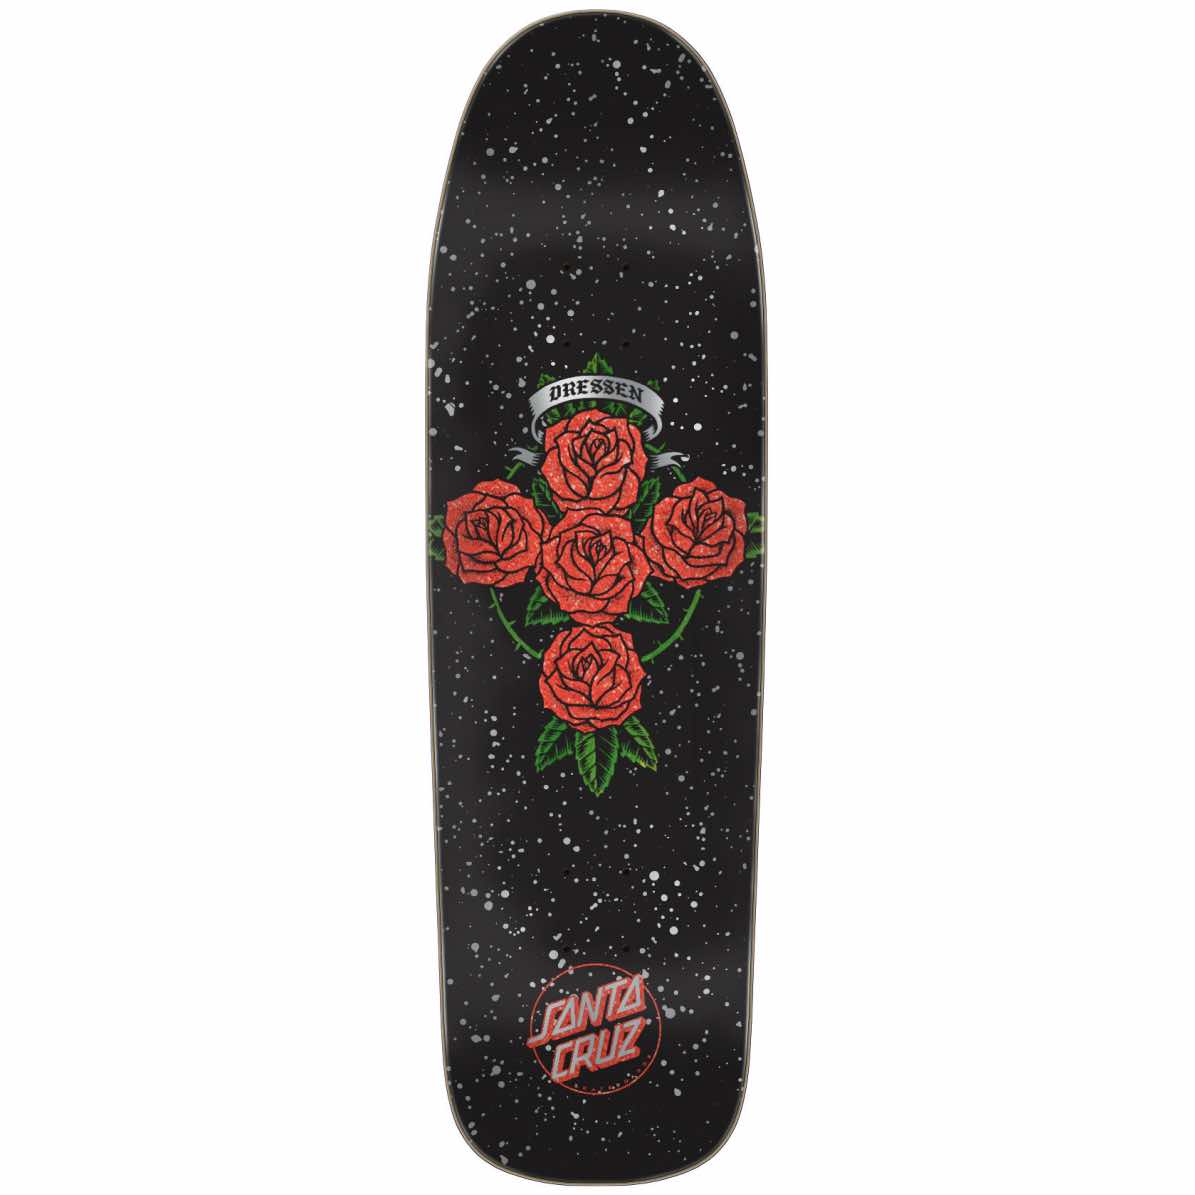 Santa Cruz Dressen Rose Cross 9.3" skateboard deck